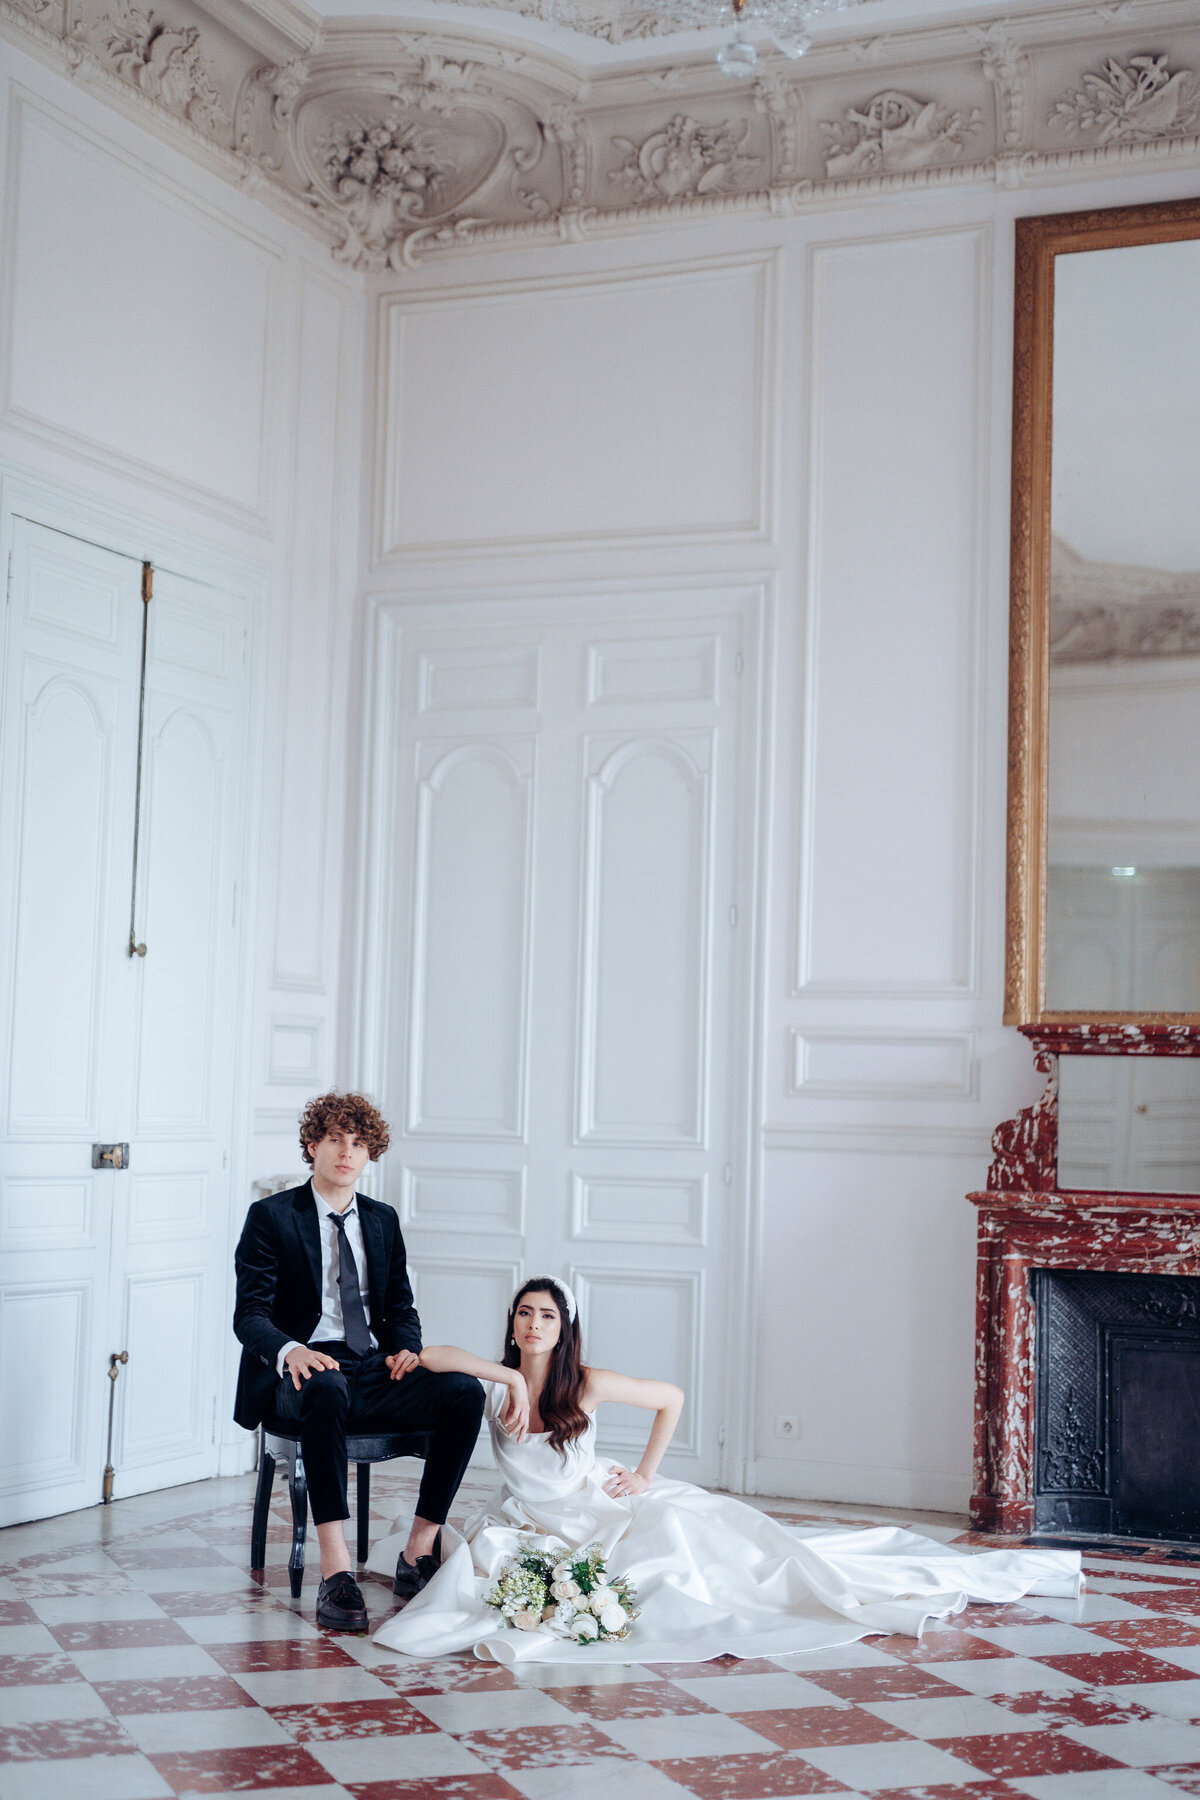 079-Chateau-de-Santeny-Paris-France-Inspiration-Love-Story Elopement-Cinematic-Romance-Destination-Wedding-Editorial-Luxury-Fine-Art-Lisa-Vigliotta-Photography